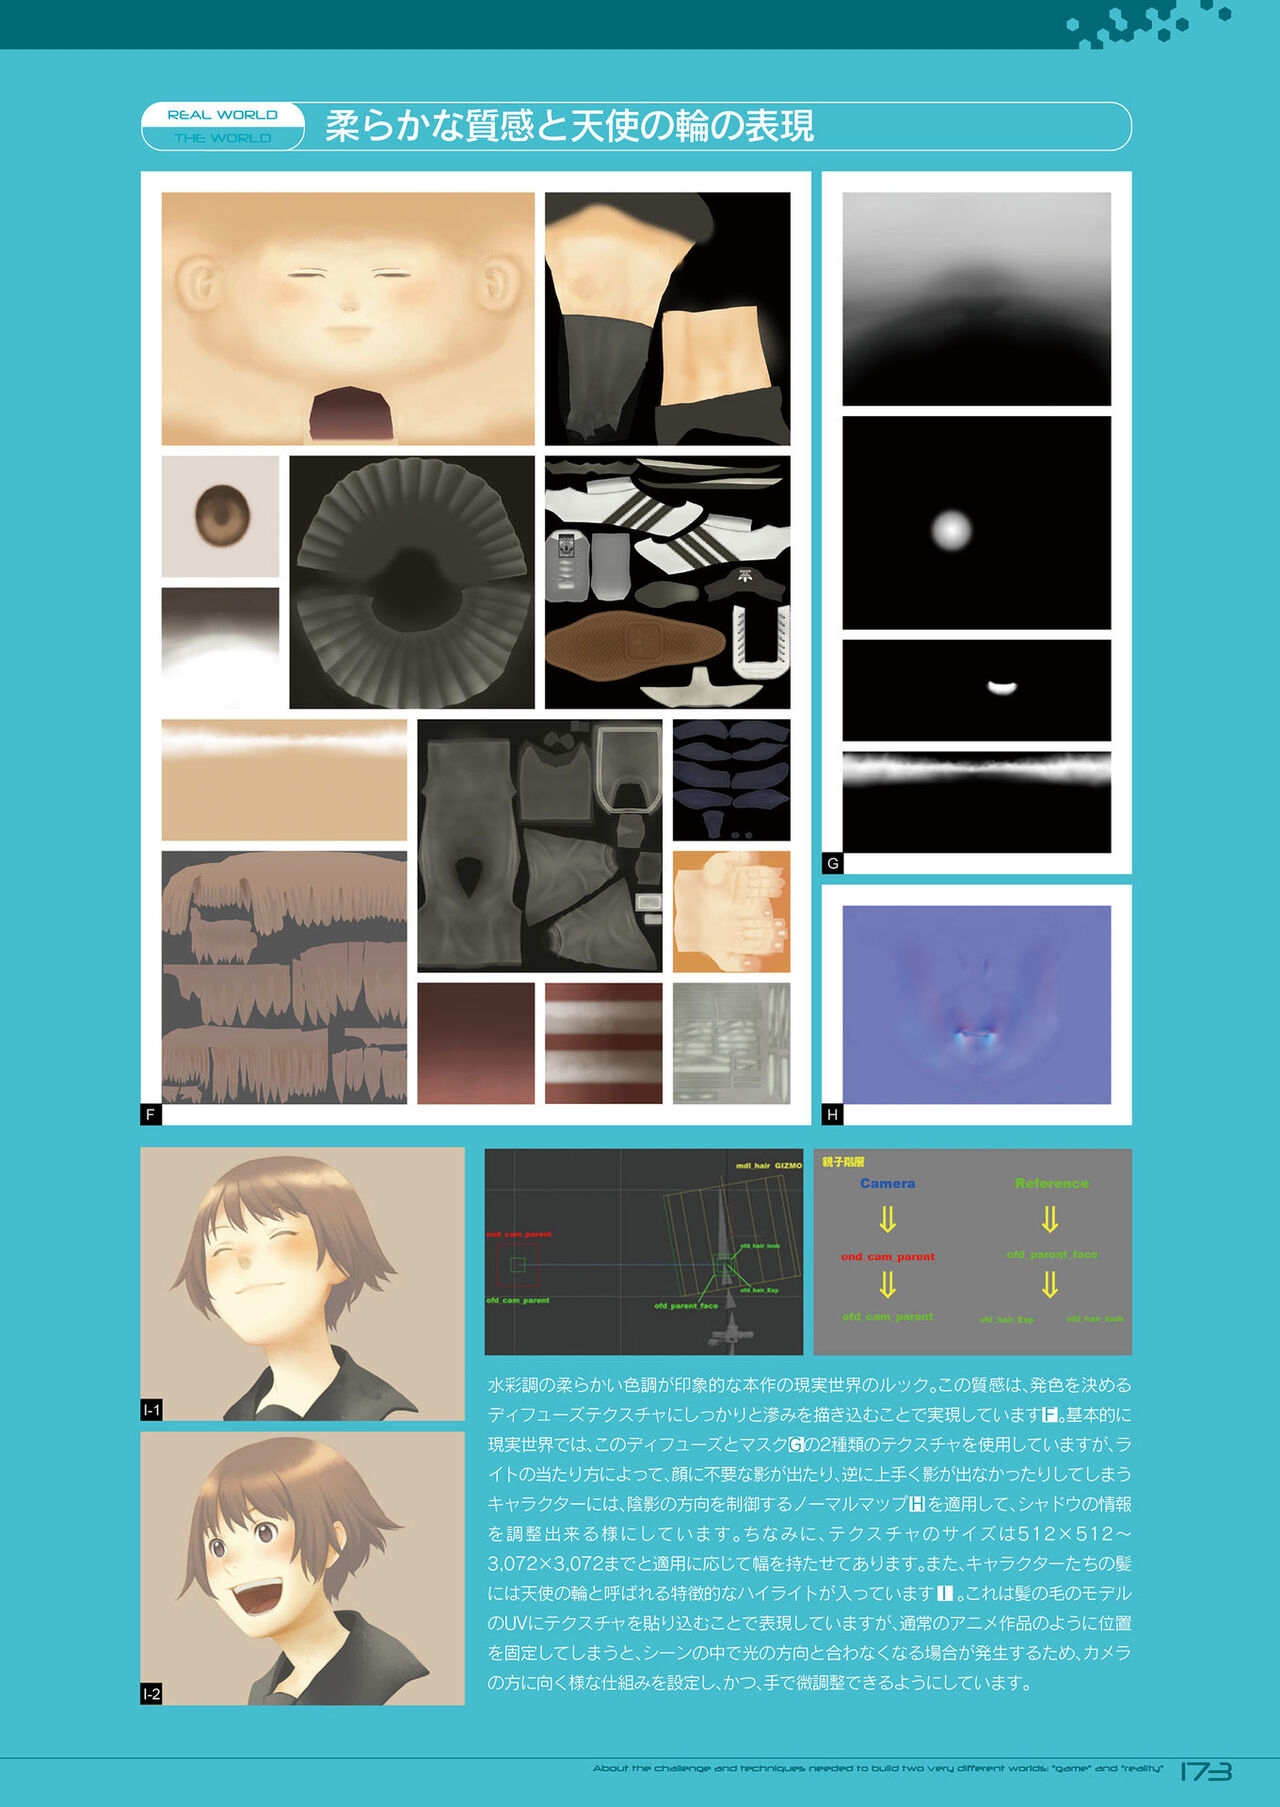 Dot Hack Sekai-no Muko ni  +Versus Complete Set  Documentation .hack //Archives _ 05 175